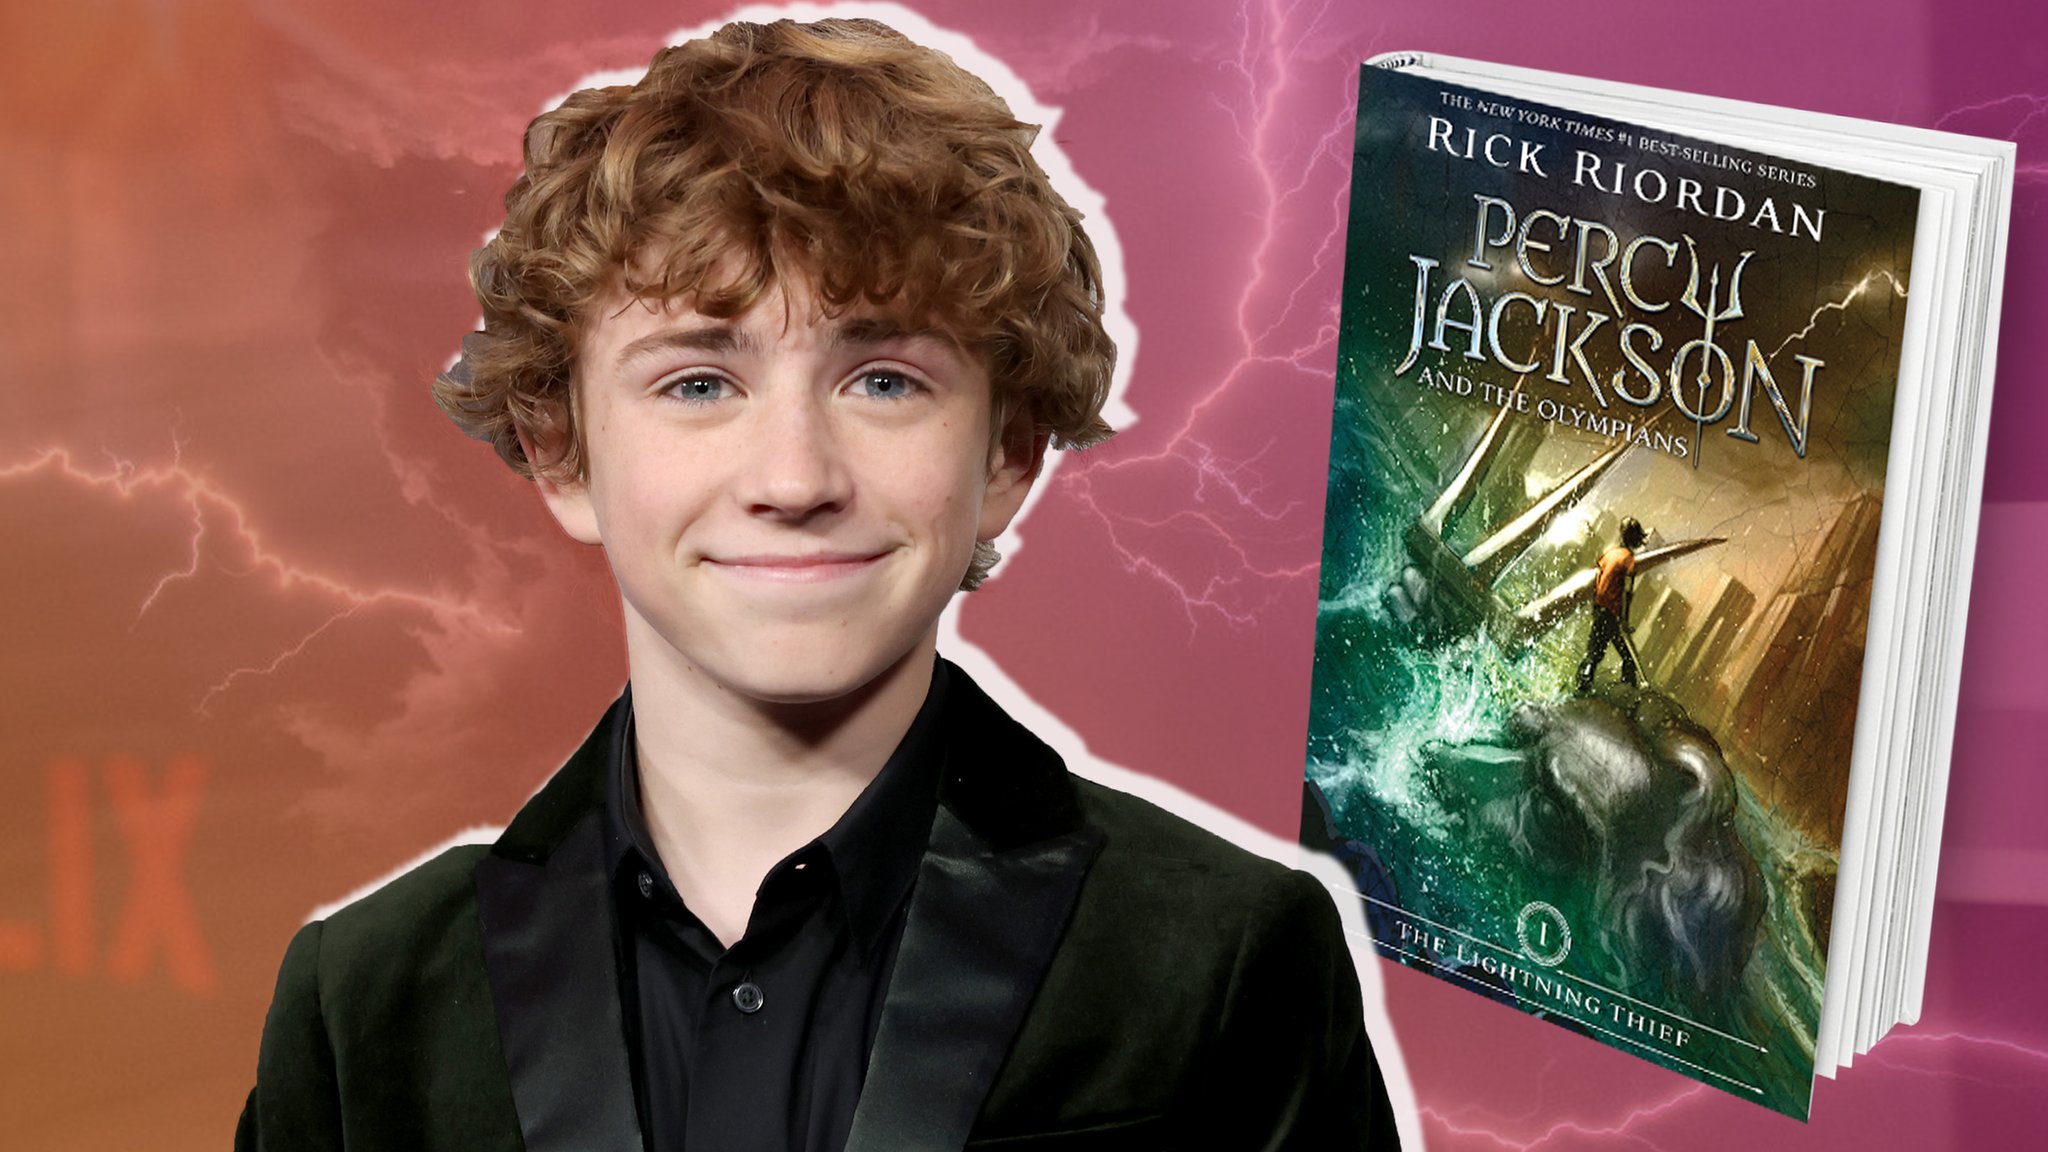 Percy Jackson' Disney+ Cast: Gods, Monsters, Demigods